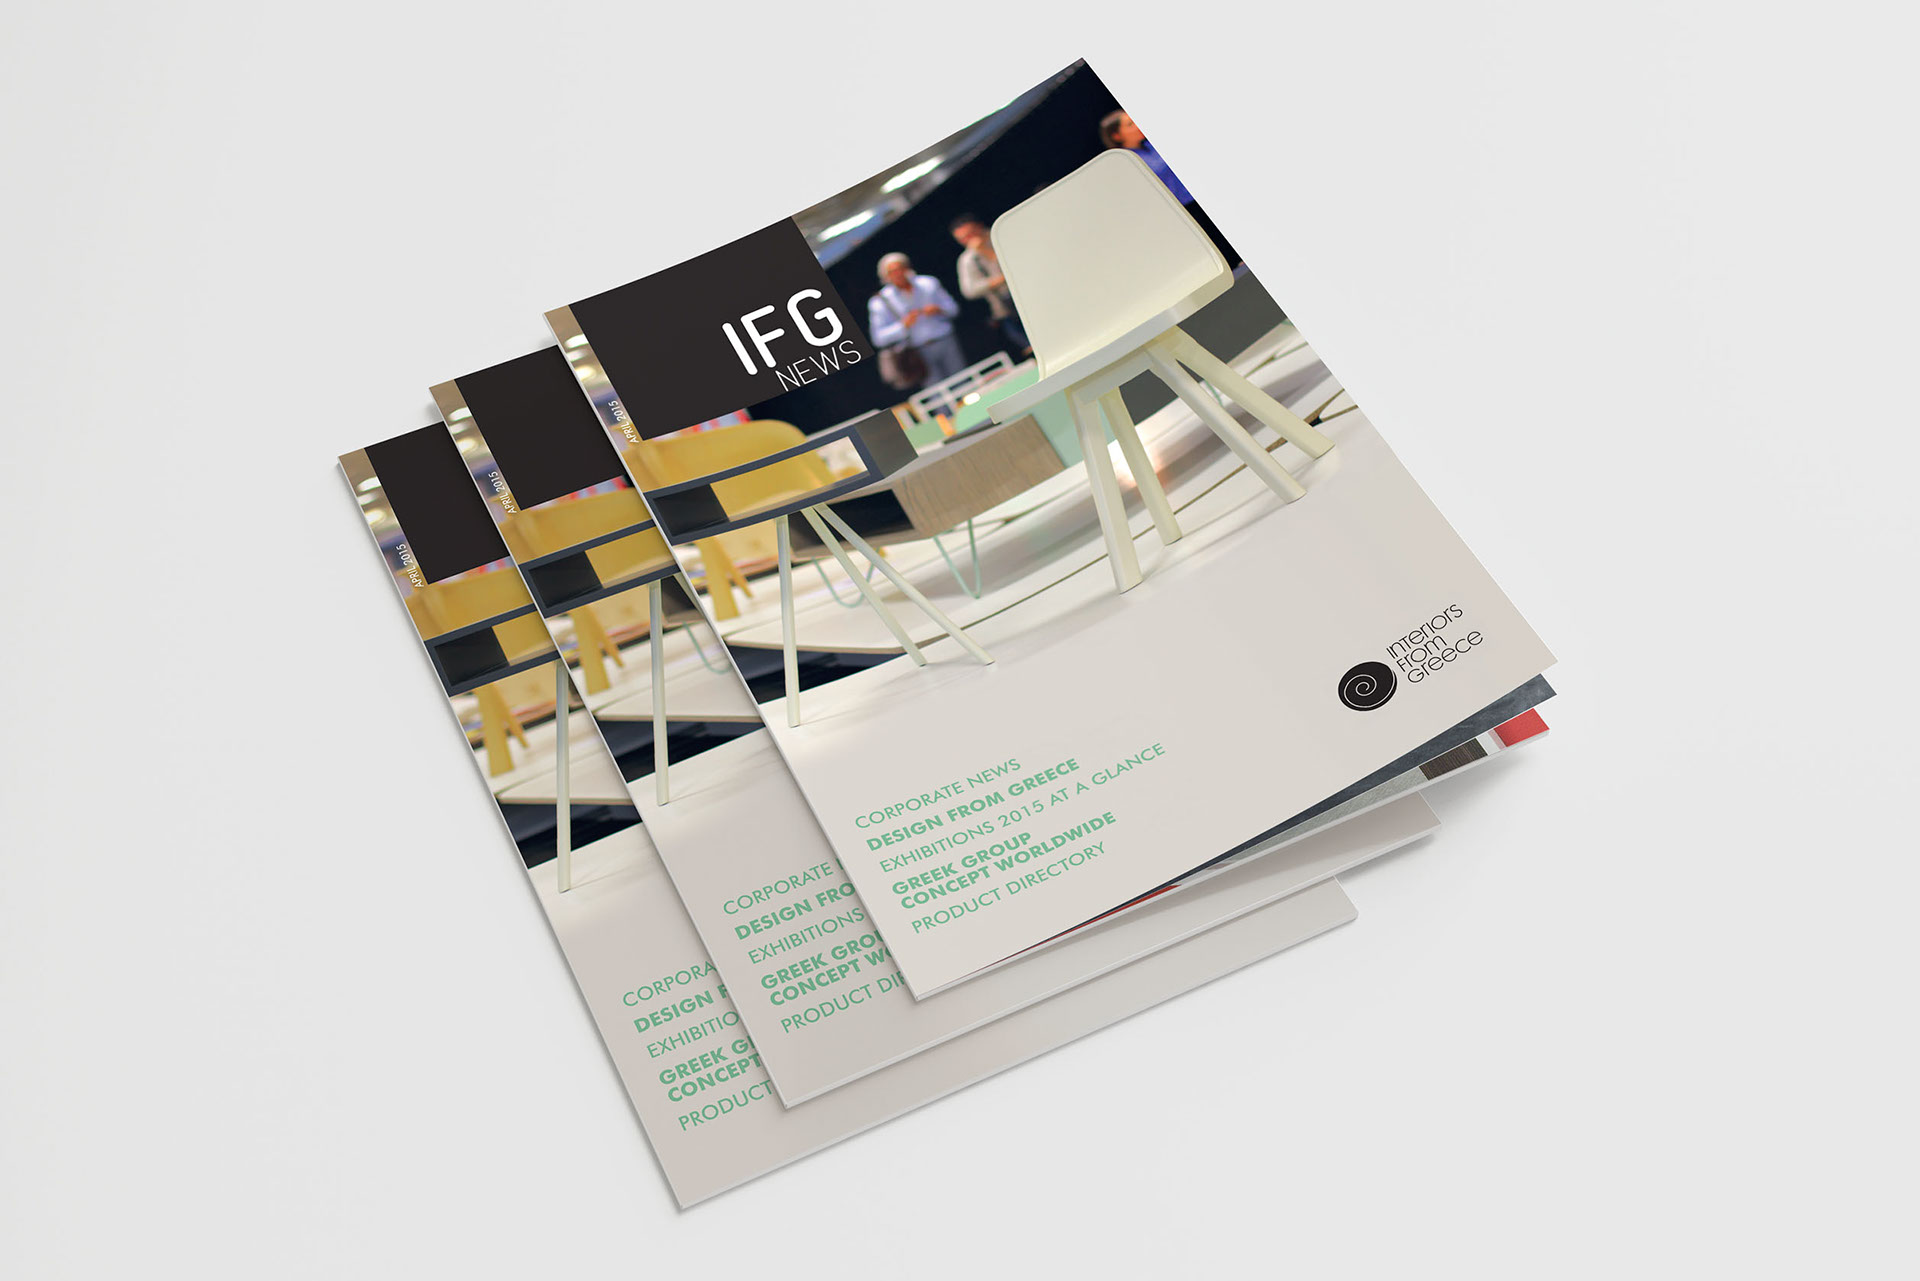 IFG news室內設計刊物版面設計